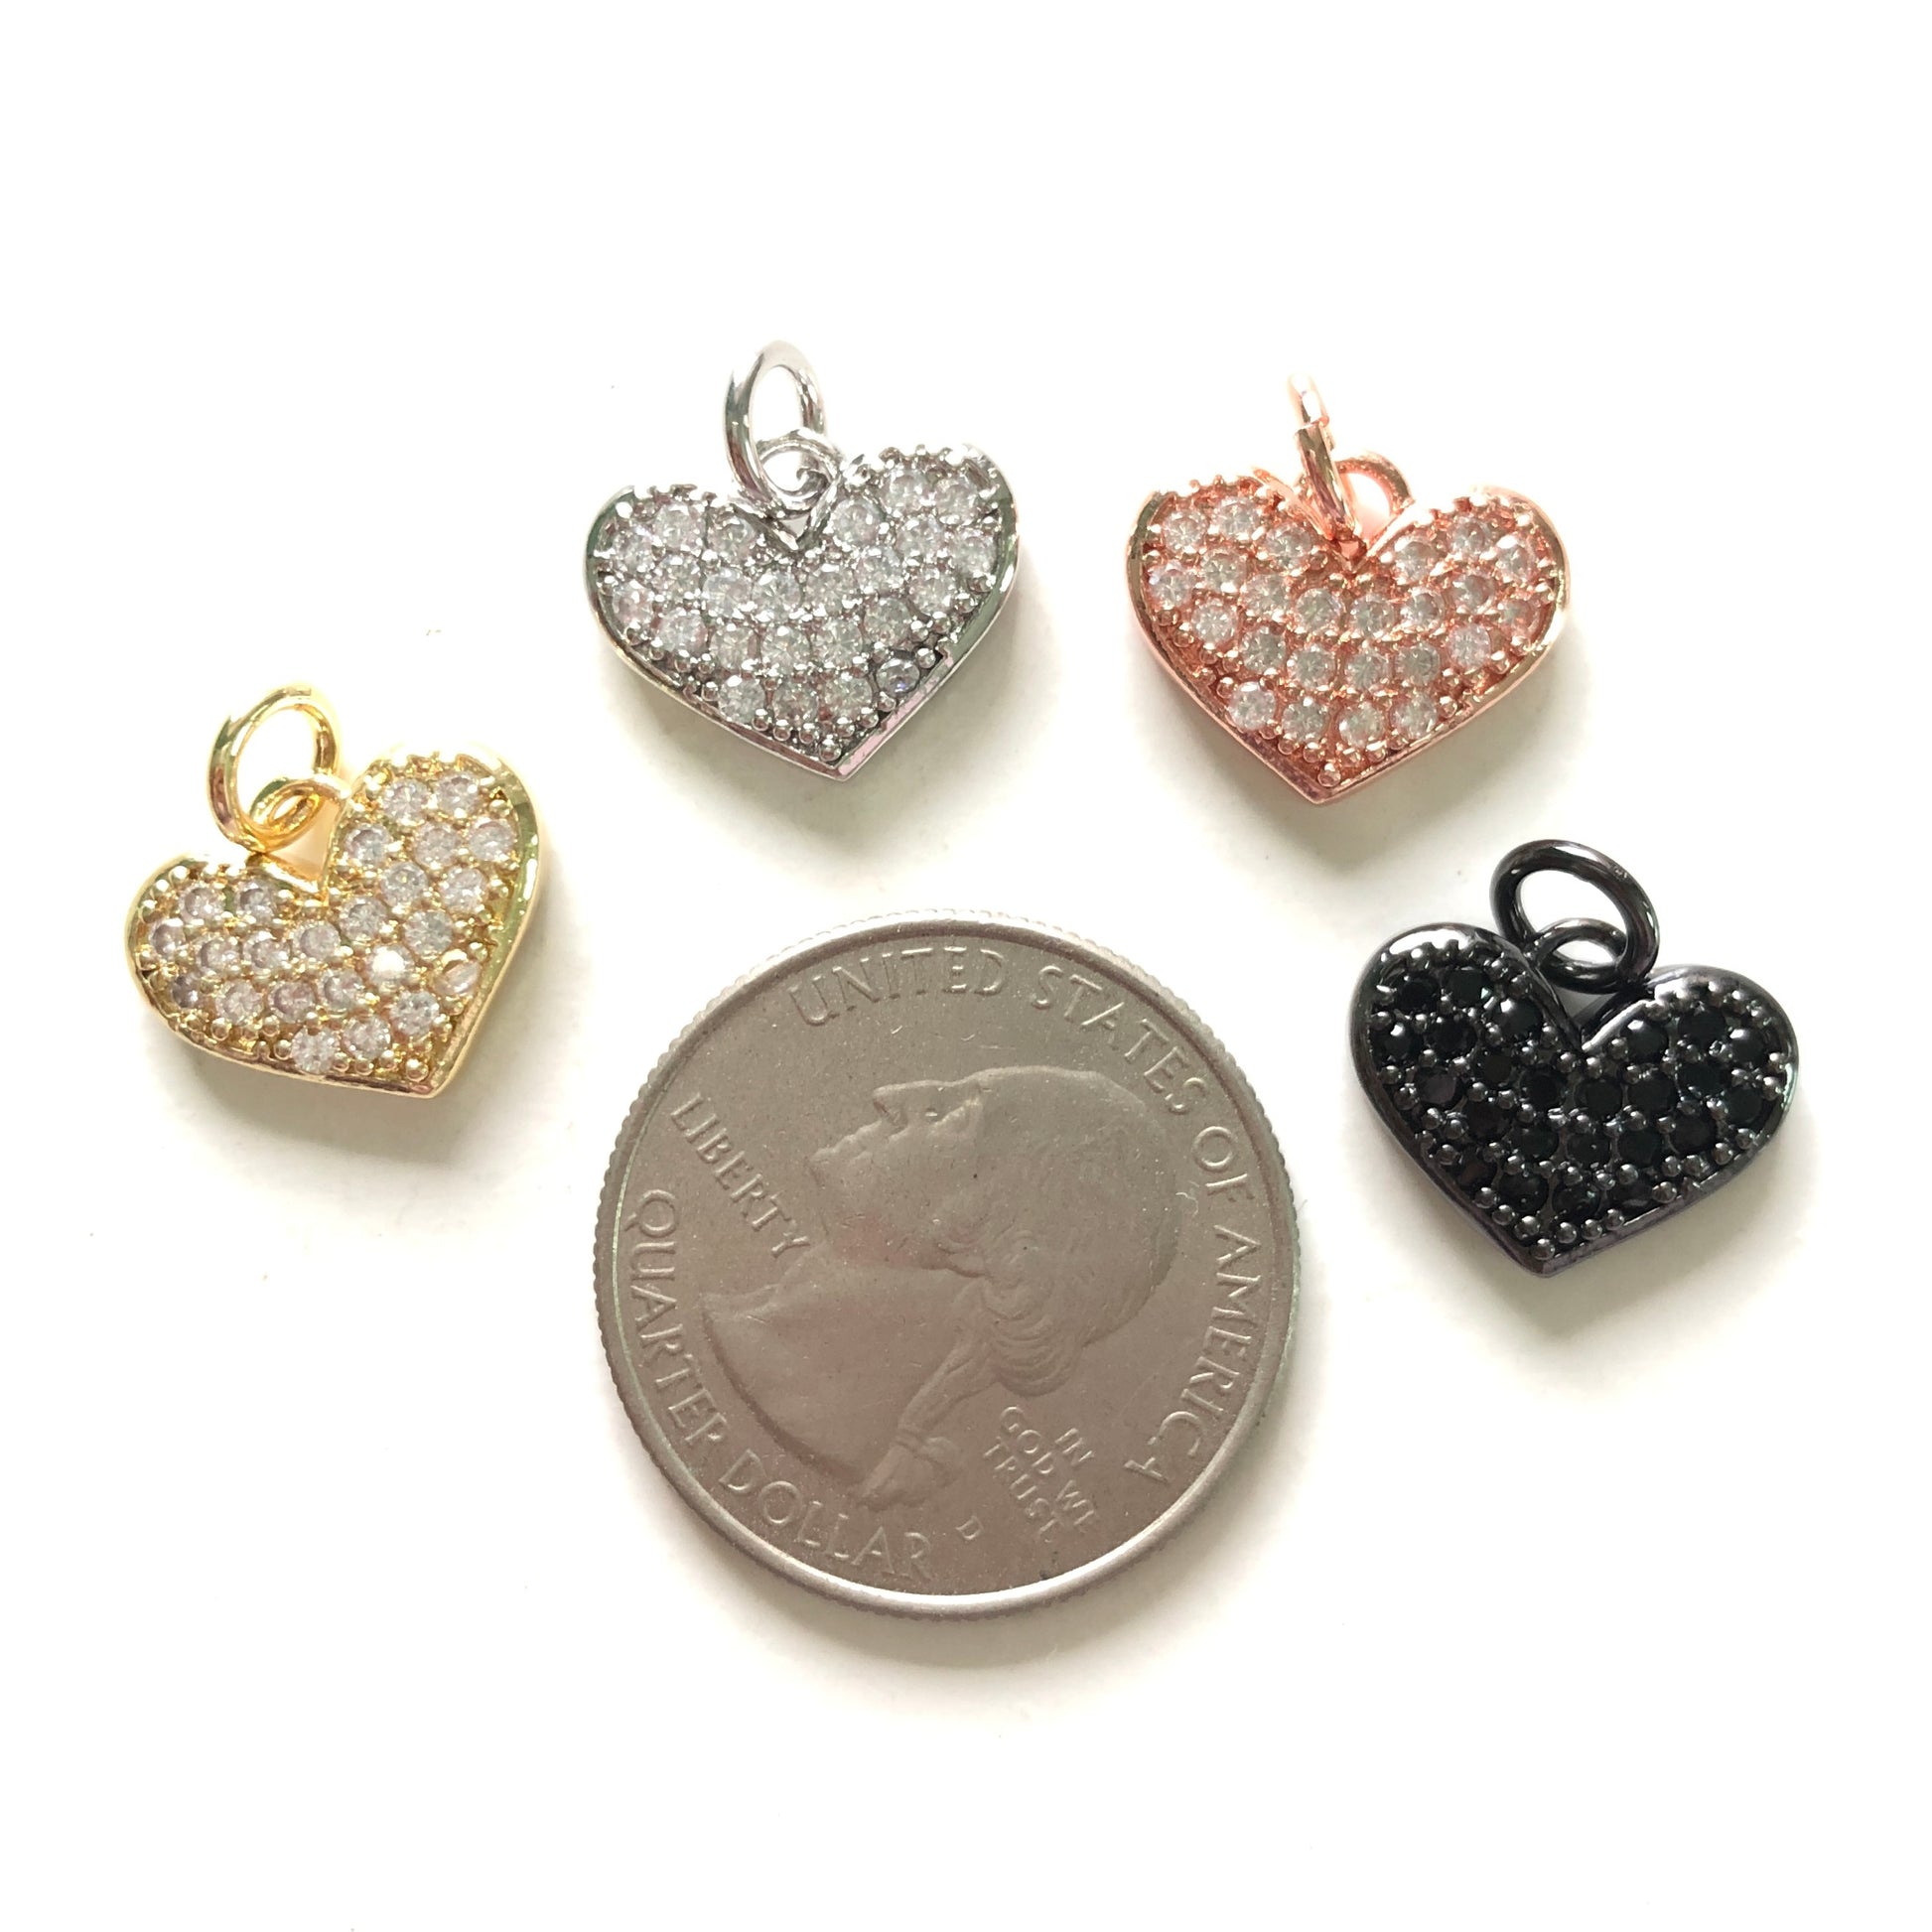 10pcs/lot 15*12mm Small Size CZ Paved Heart Charms CZ Paved Charms Hearts Small Sizes Charms Beads Beyond